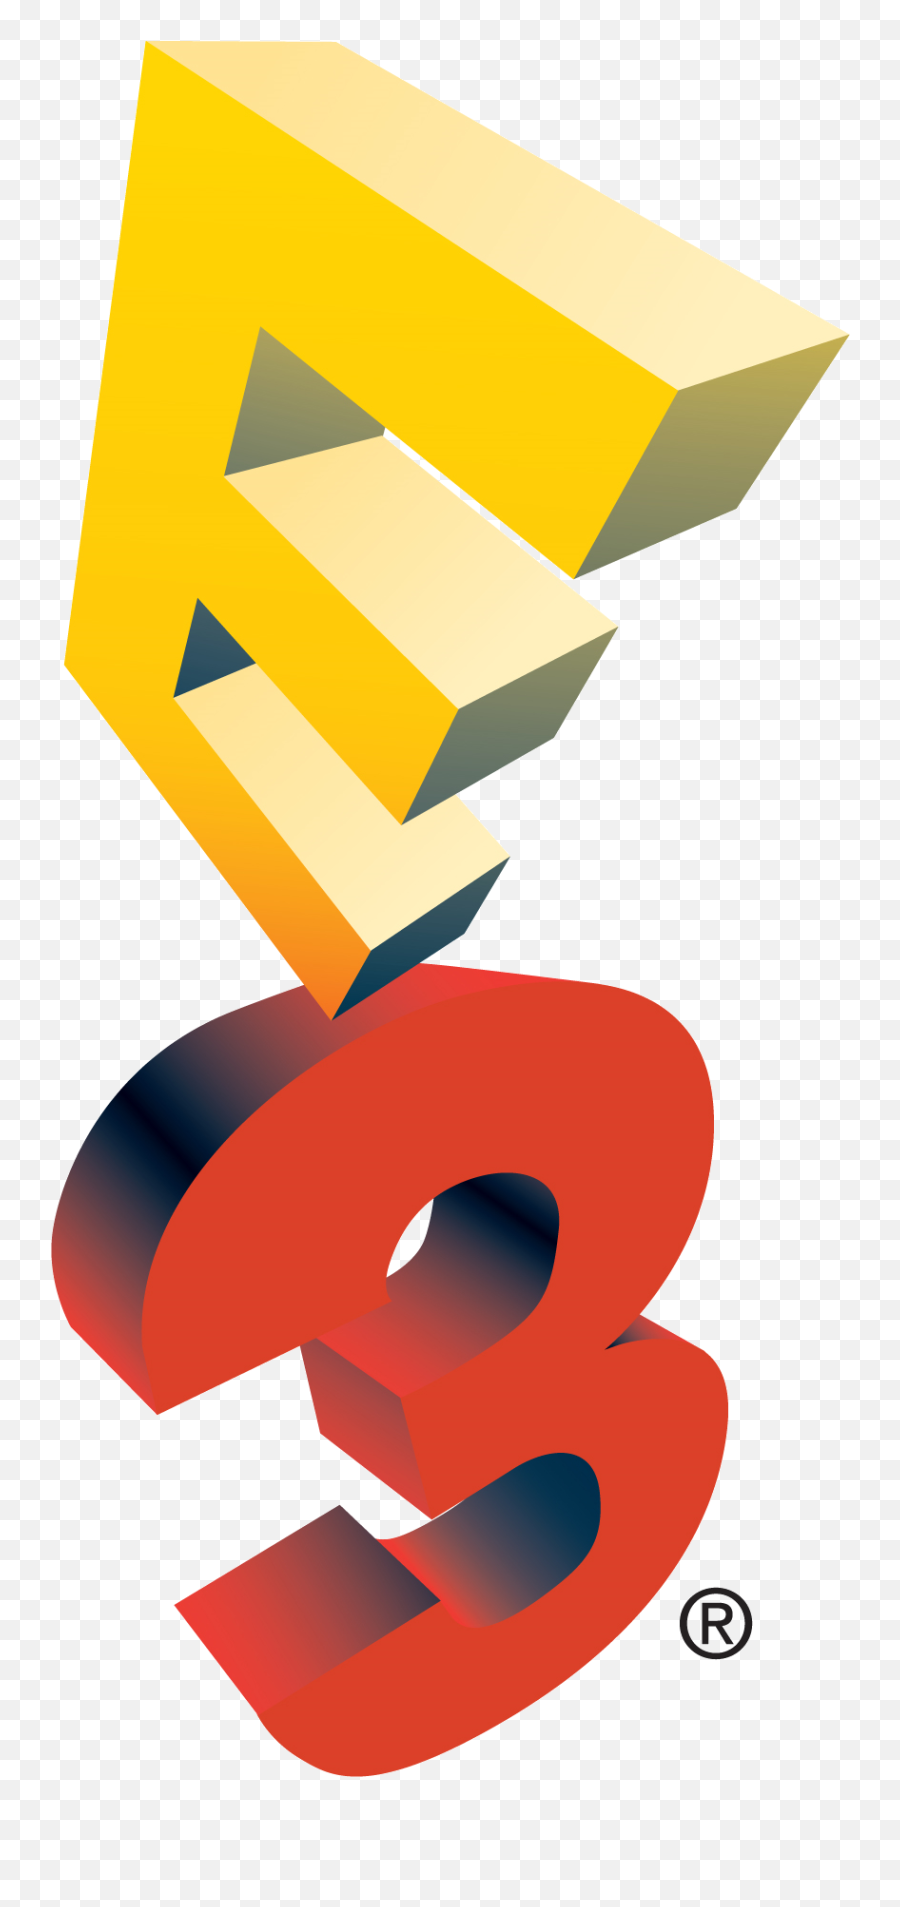 E3 Media Business Summit - Electronic Entertainment Expo Logo Emoji,Satoru Iwata Salute Emoticon